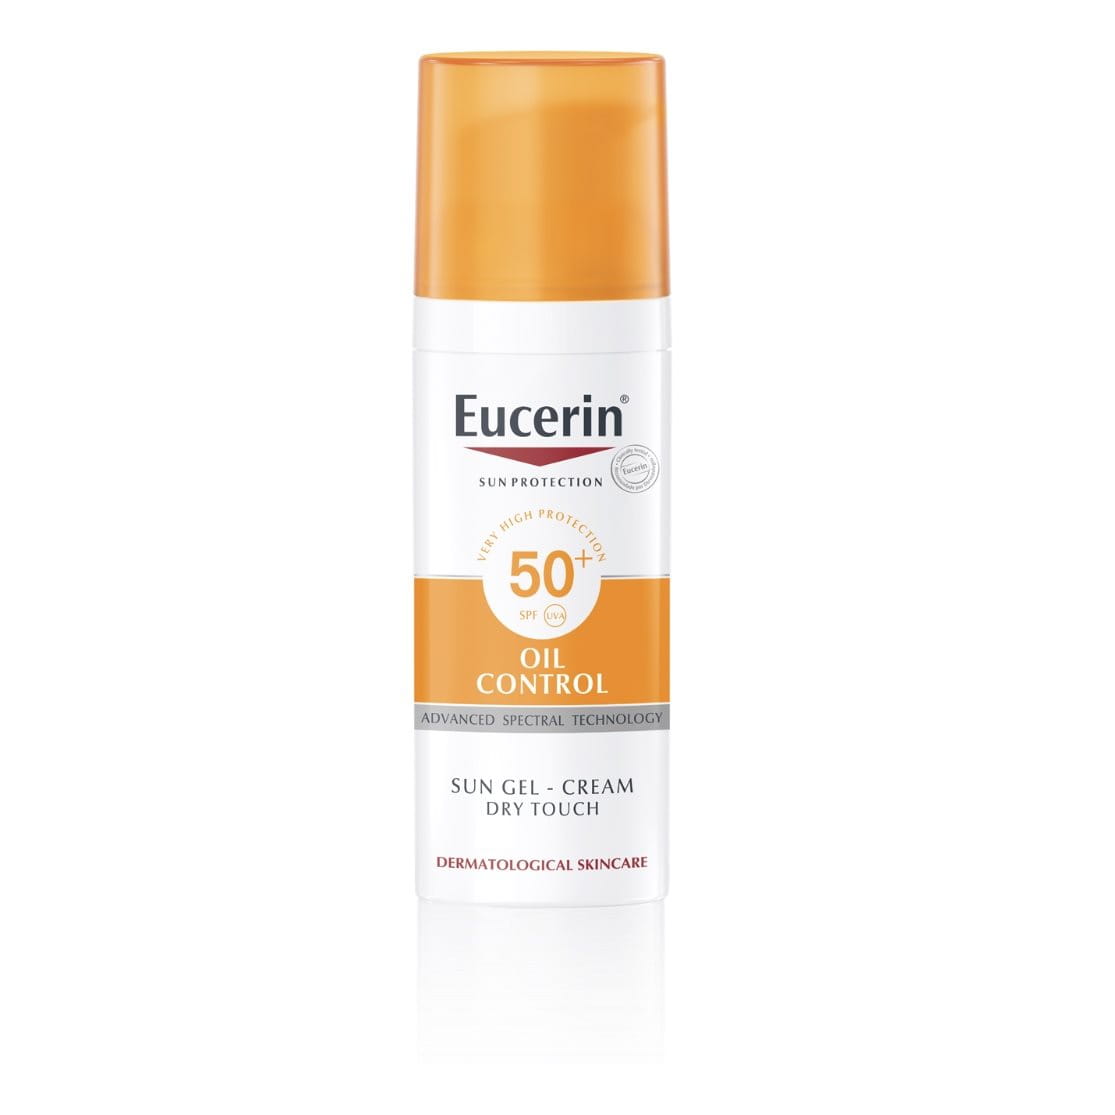 Eucerin Sun Face Oil Control Dry Touch SPF 50+